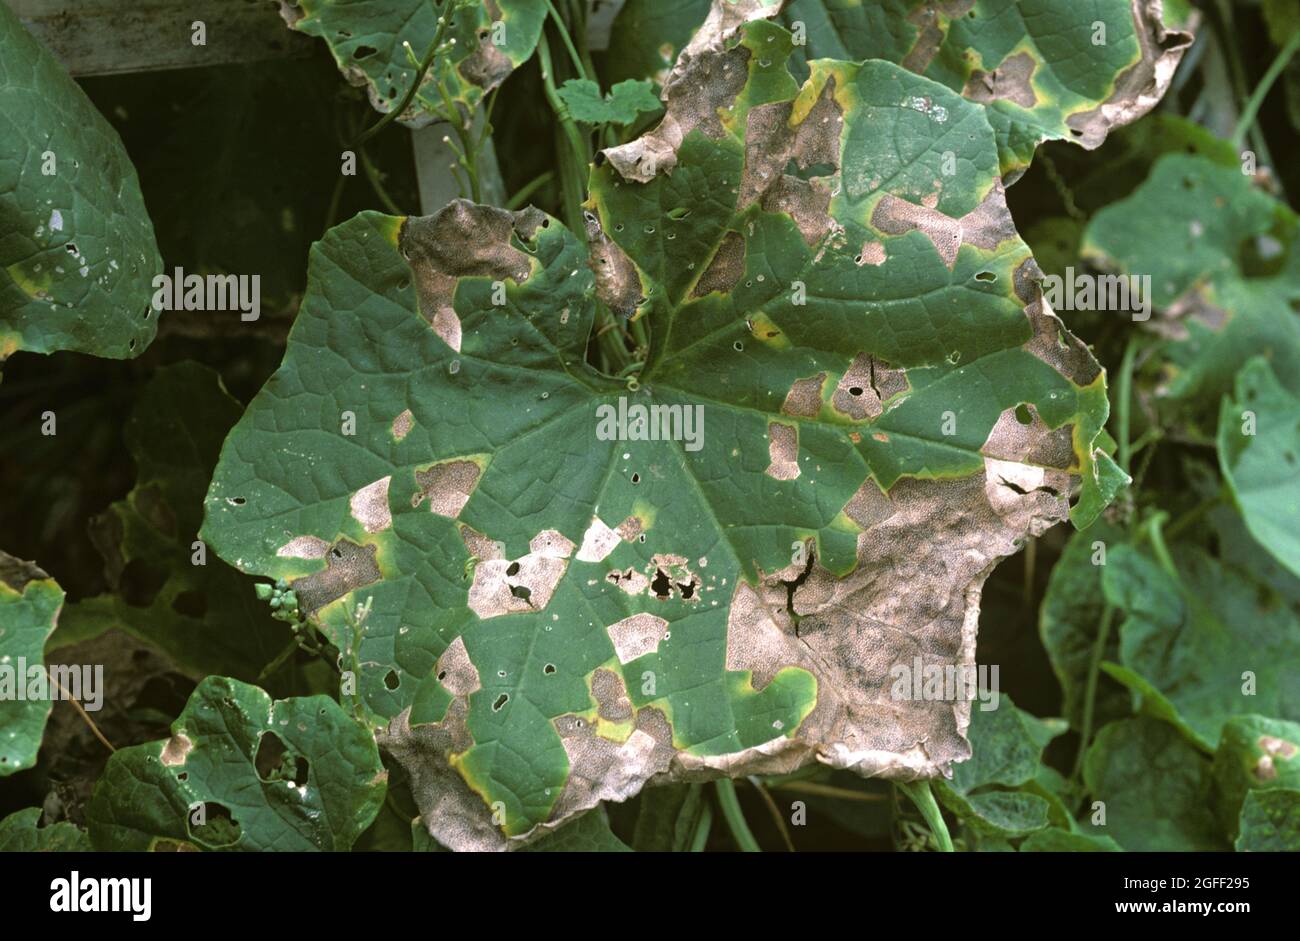 Cucurbit angular leaf spot (Pseudomonas syringae pv lachrymans) lesions of a bacterial disease of squash, Thailand Stock Photo